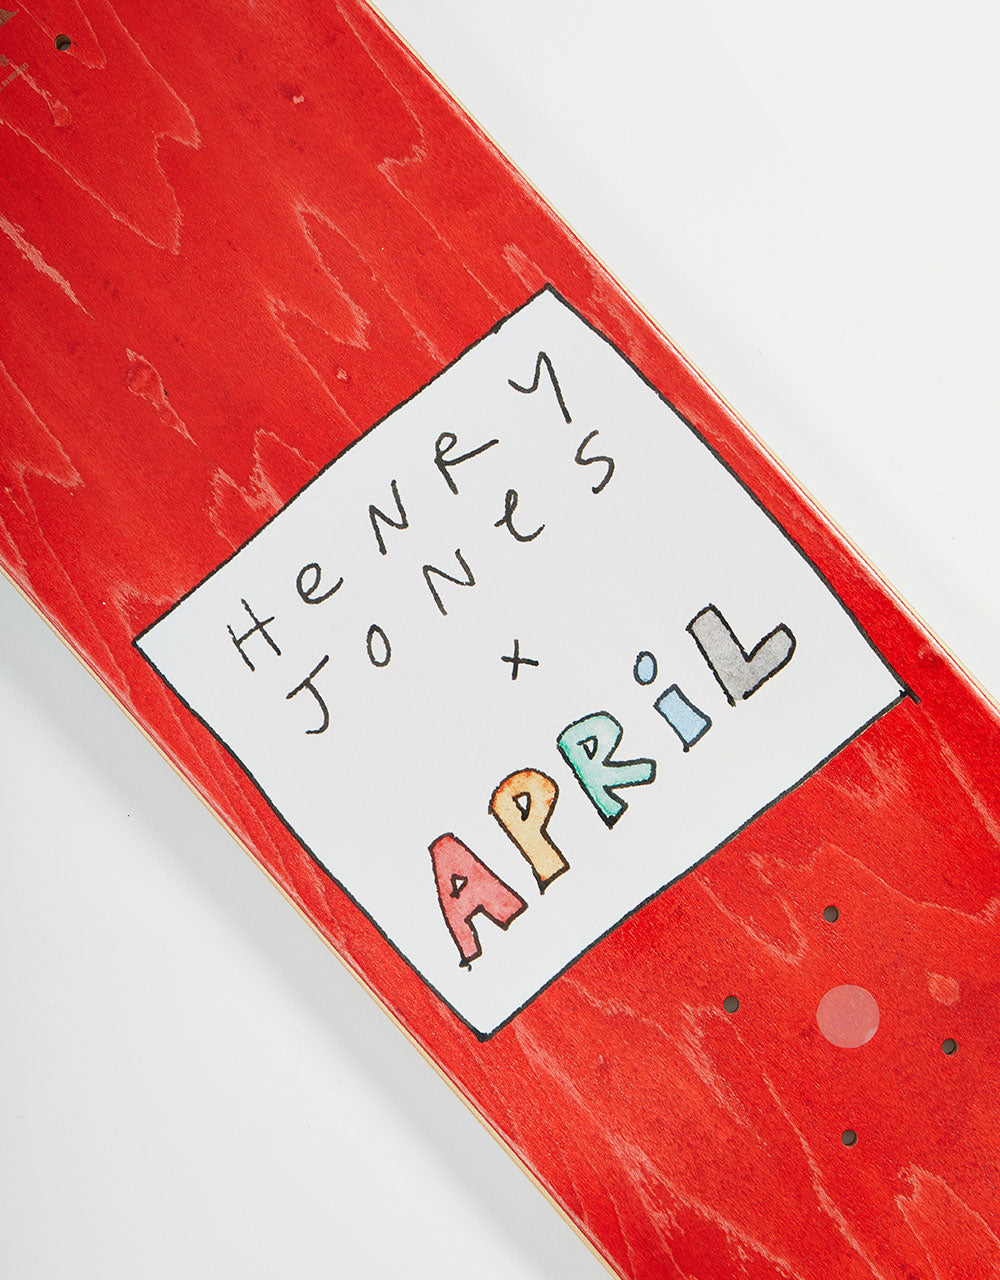 April x Henry Jones Rayssa Hollywood High Skateboard Deck - 8"